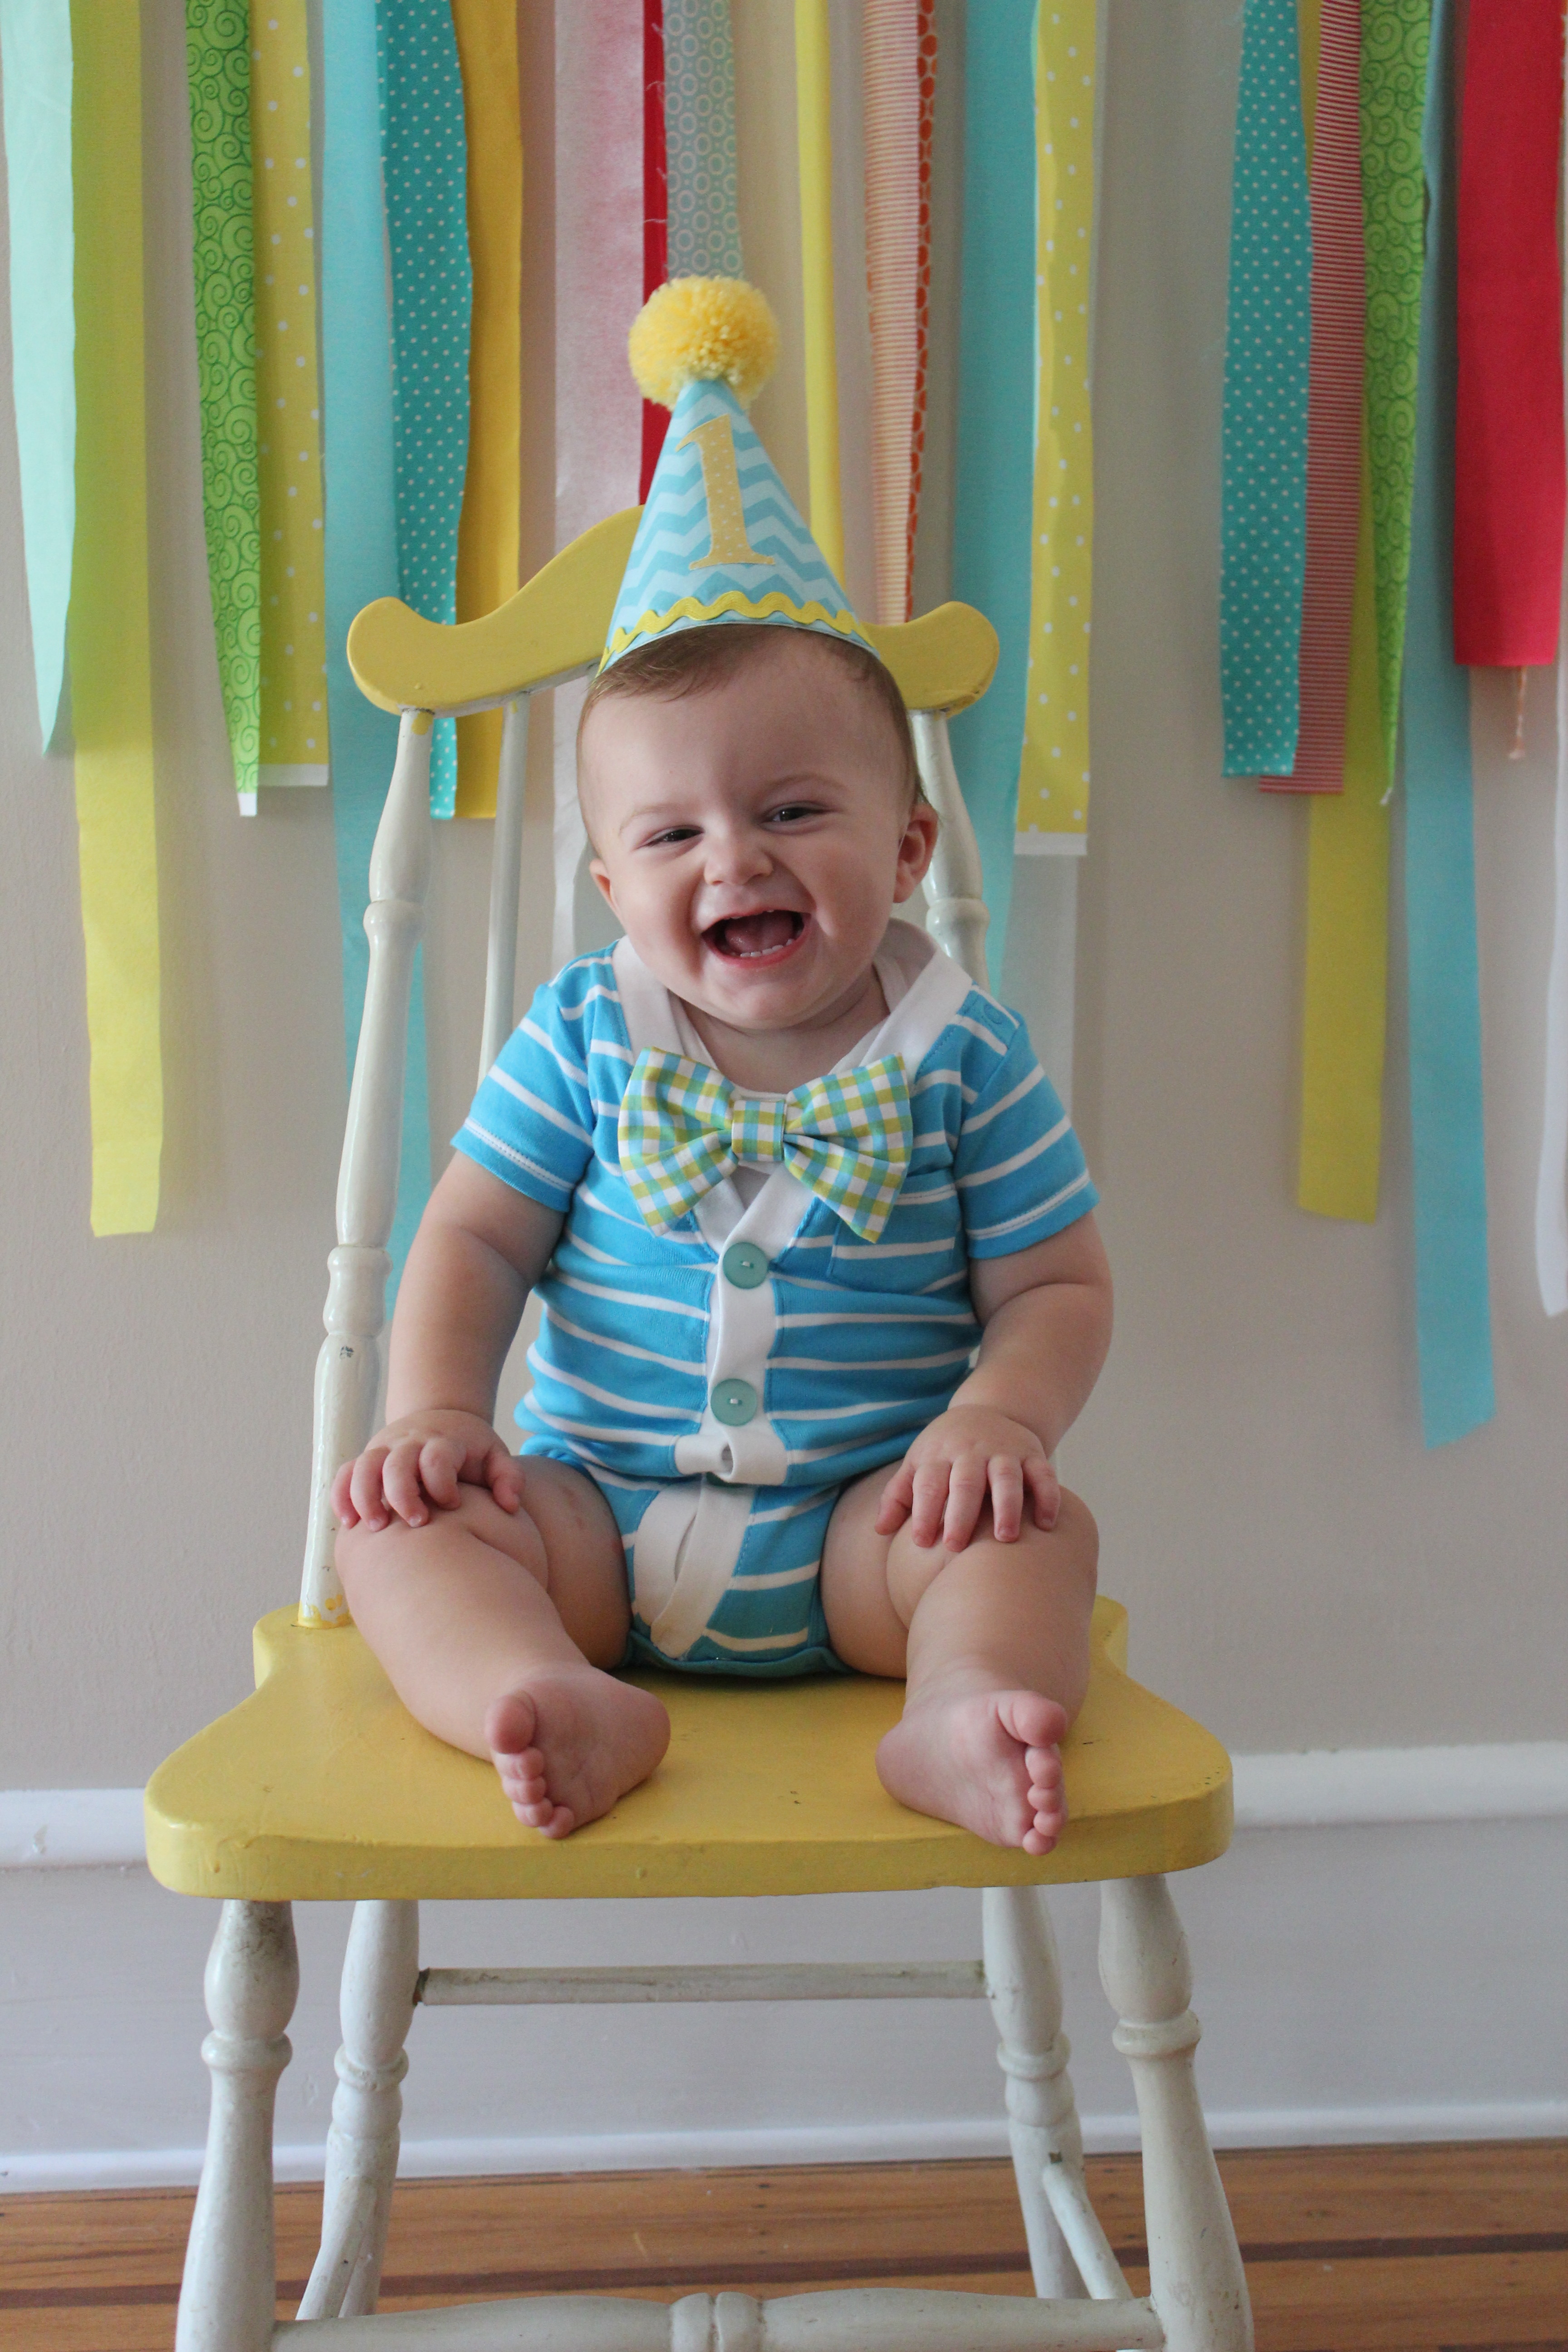 Little Man First Birthday Decor One High Chair Banner Boy Cake